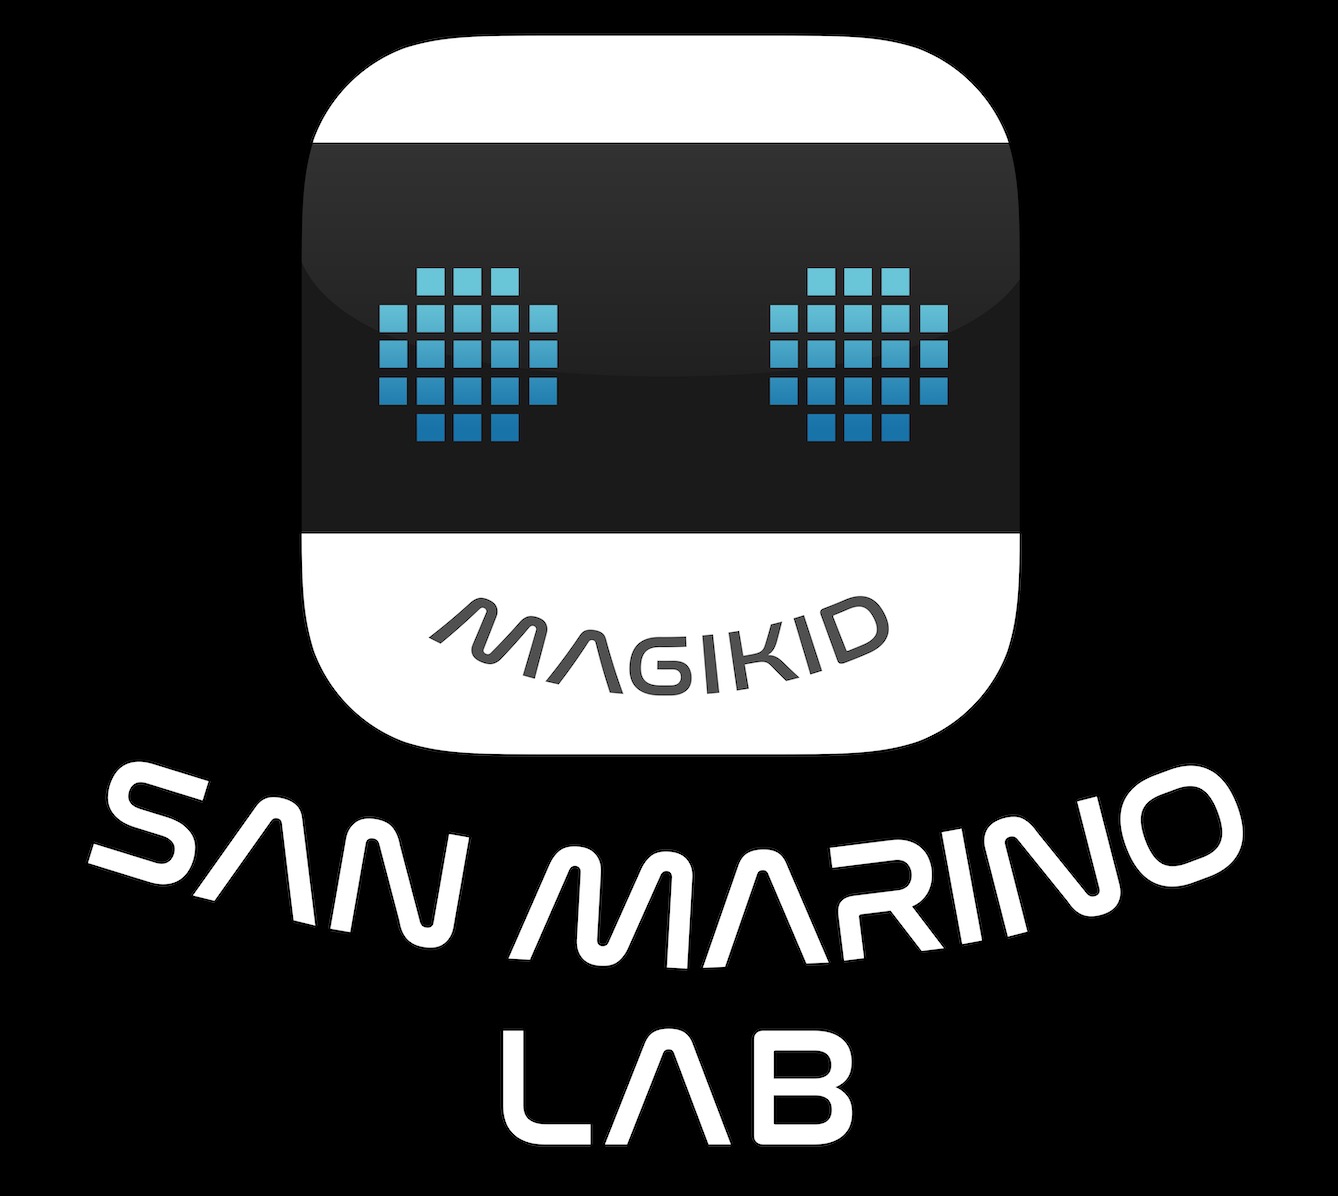 2022 Girl Powered Workshop-Magikid Robotics Lab@San Marino